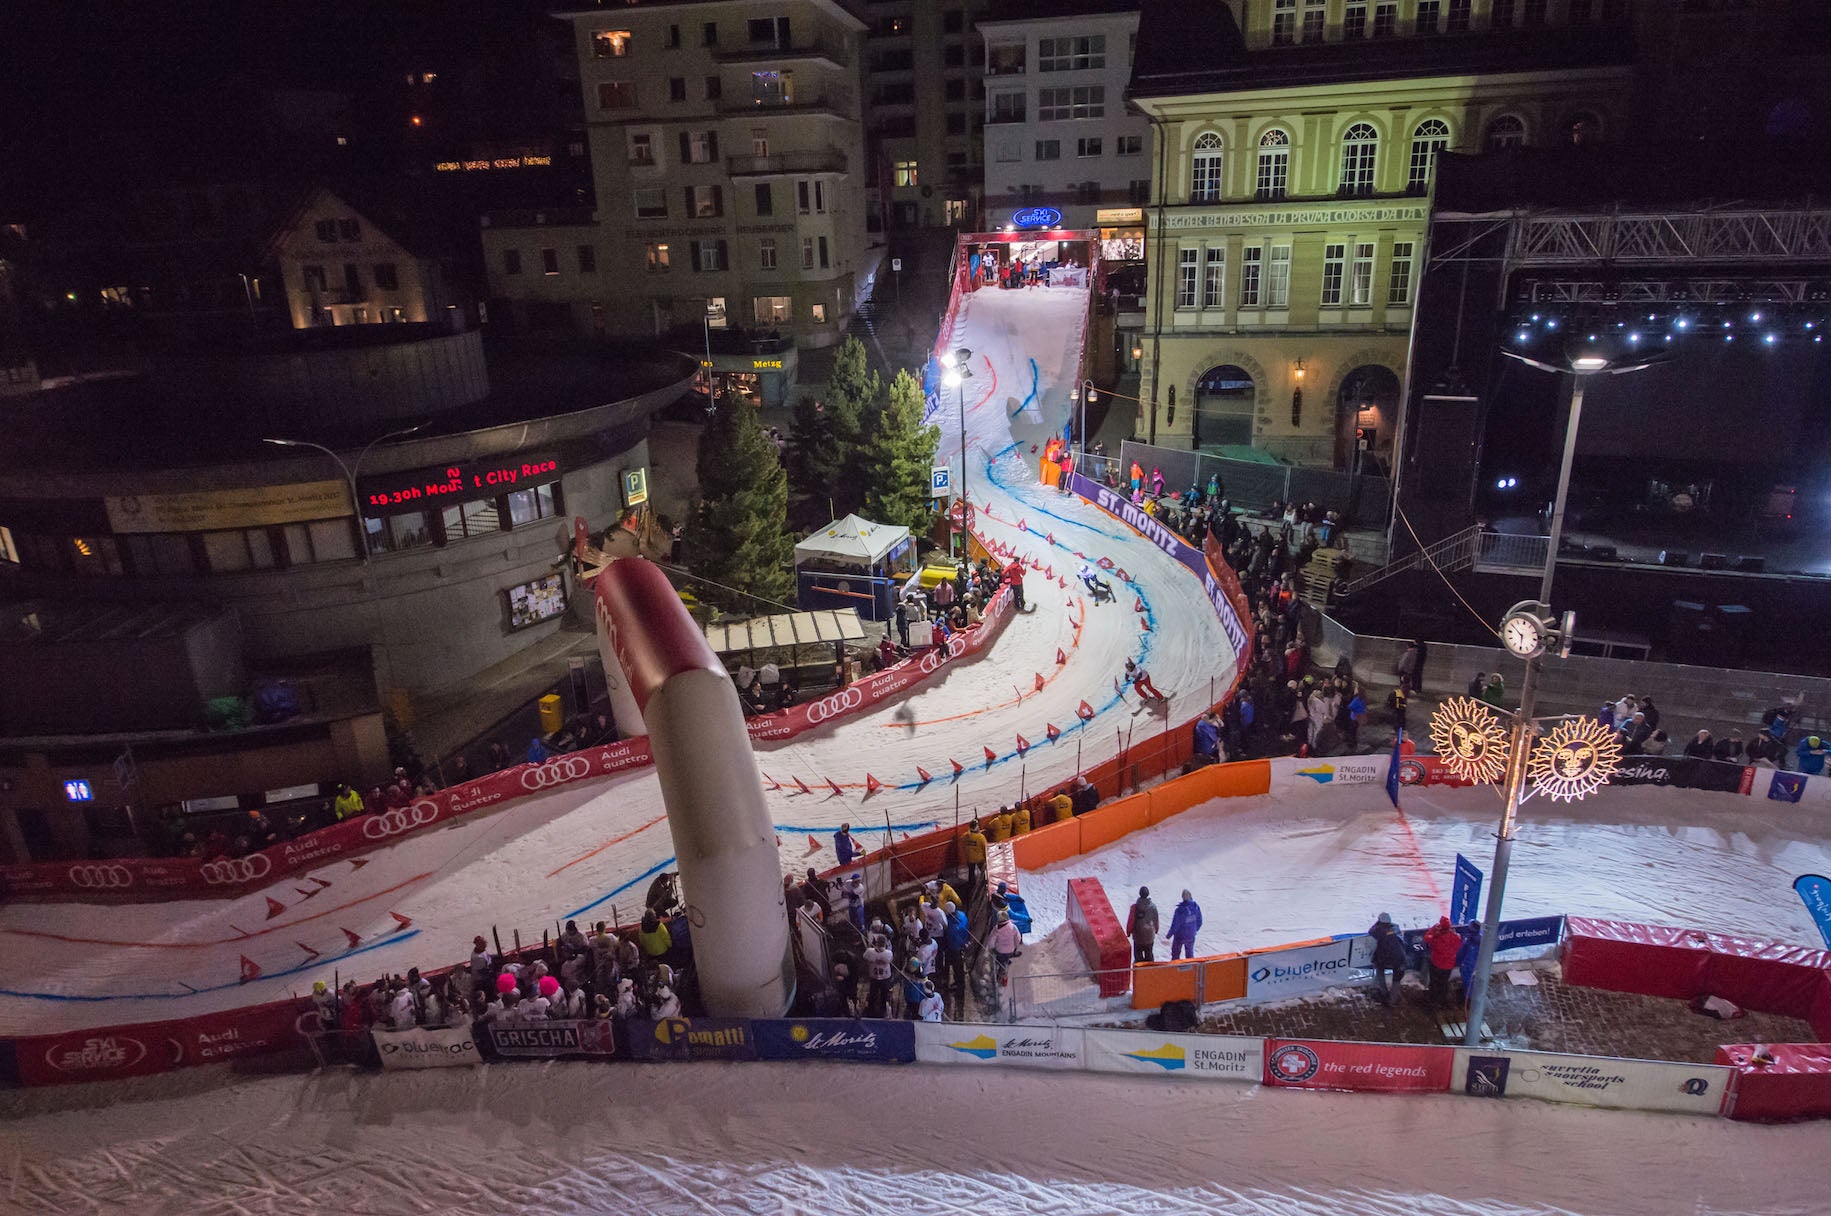 St. Moritz City Race